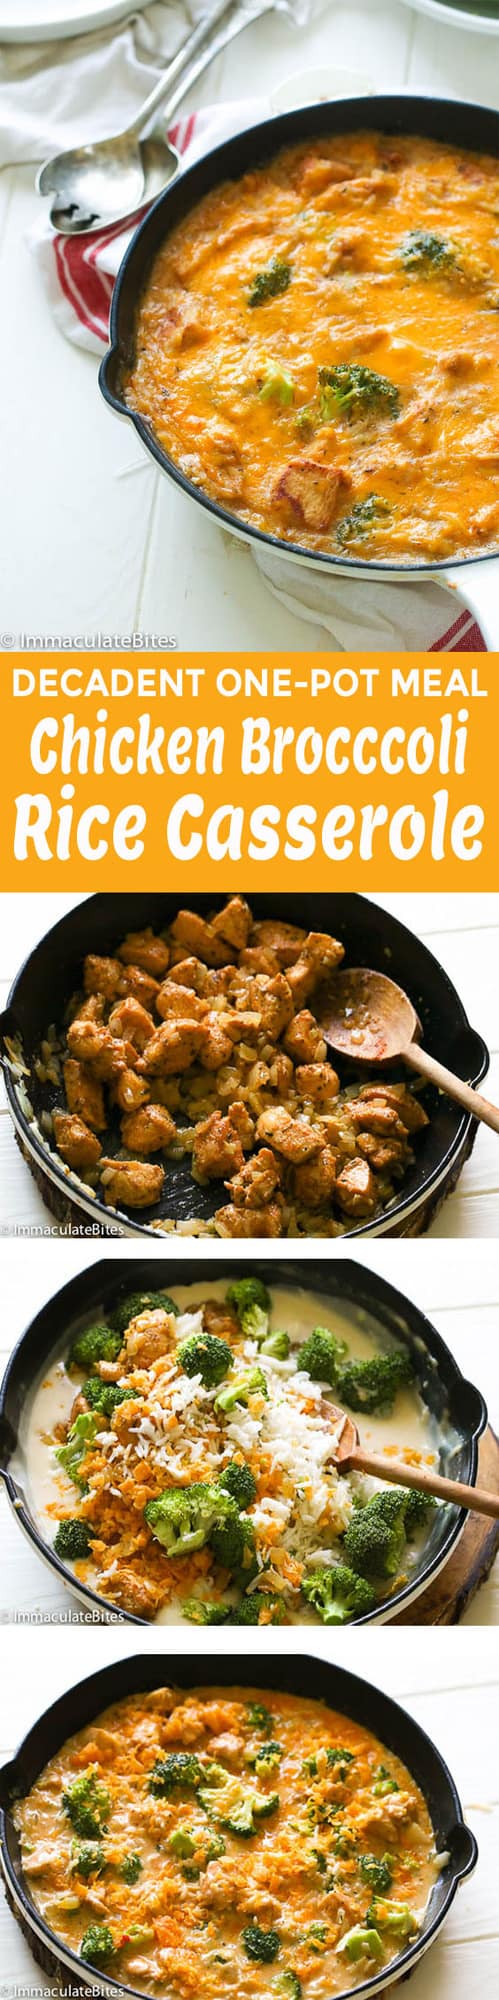 chicken broccoli rice casserole